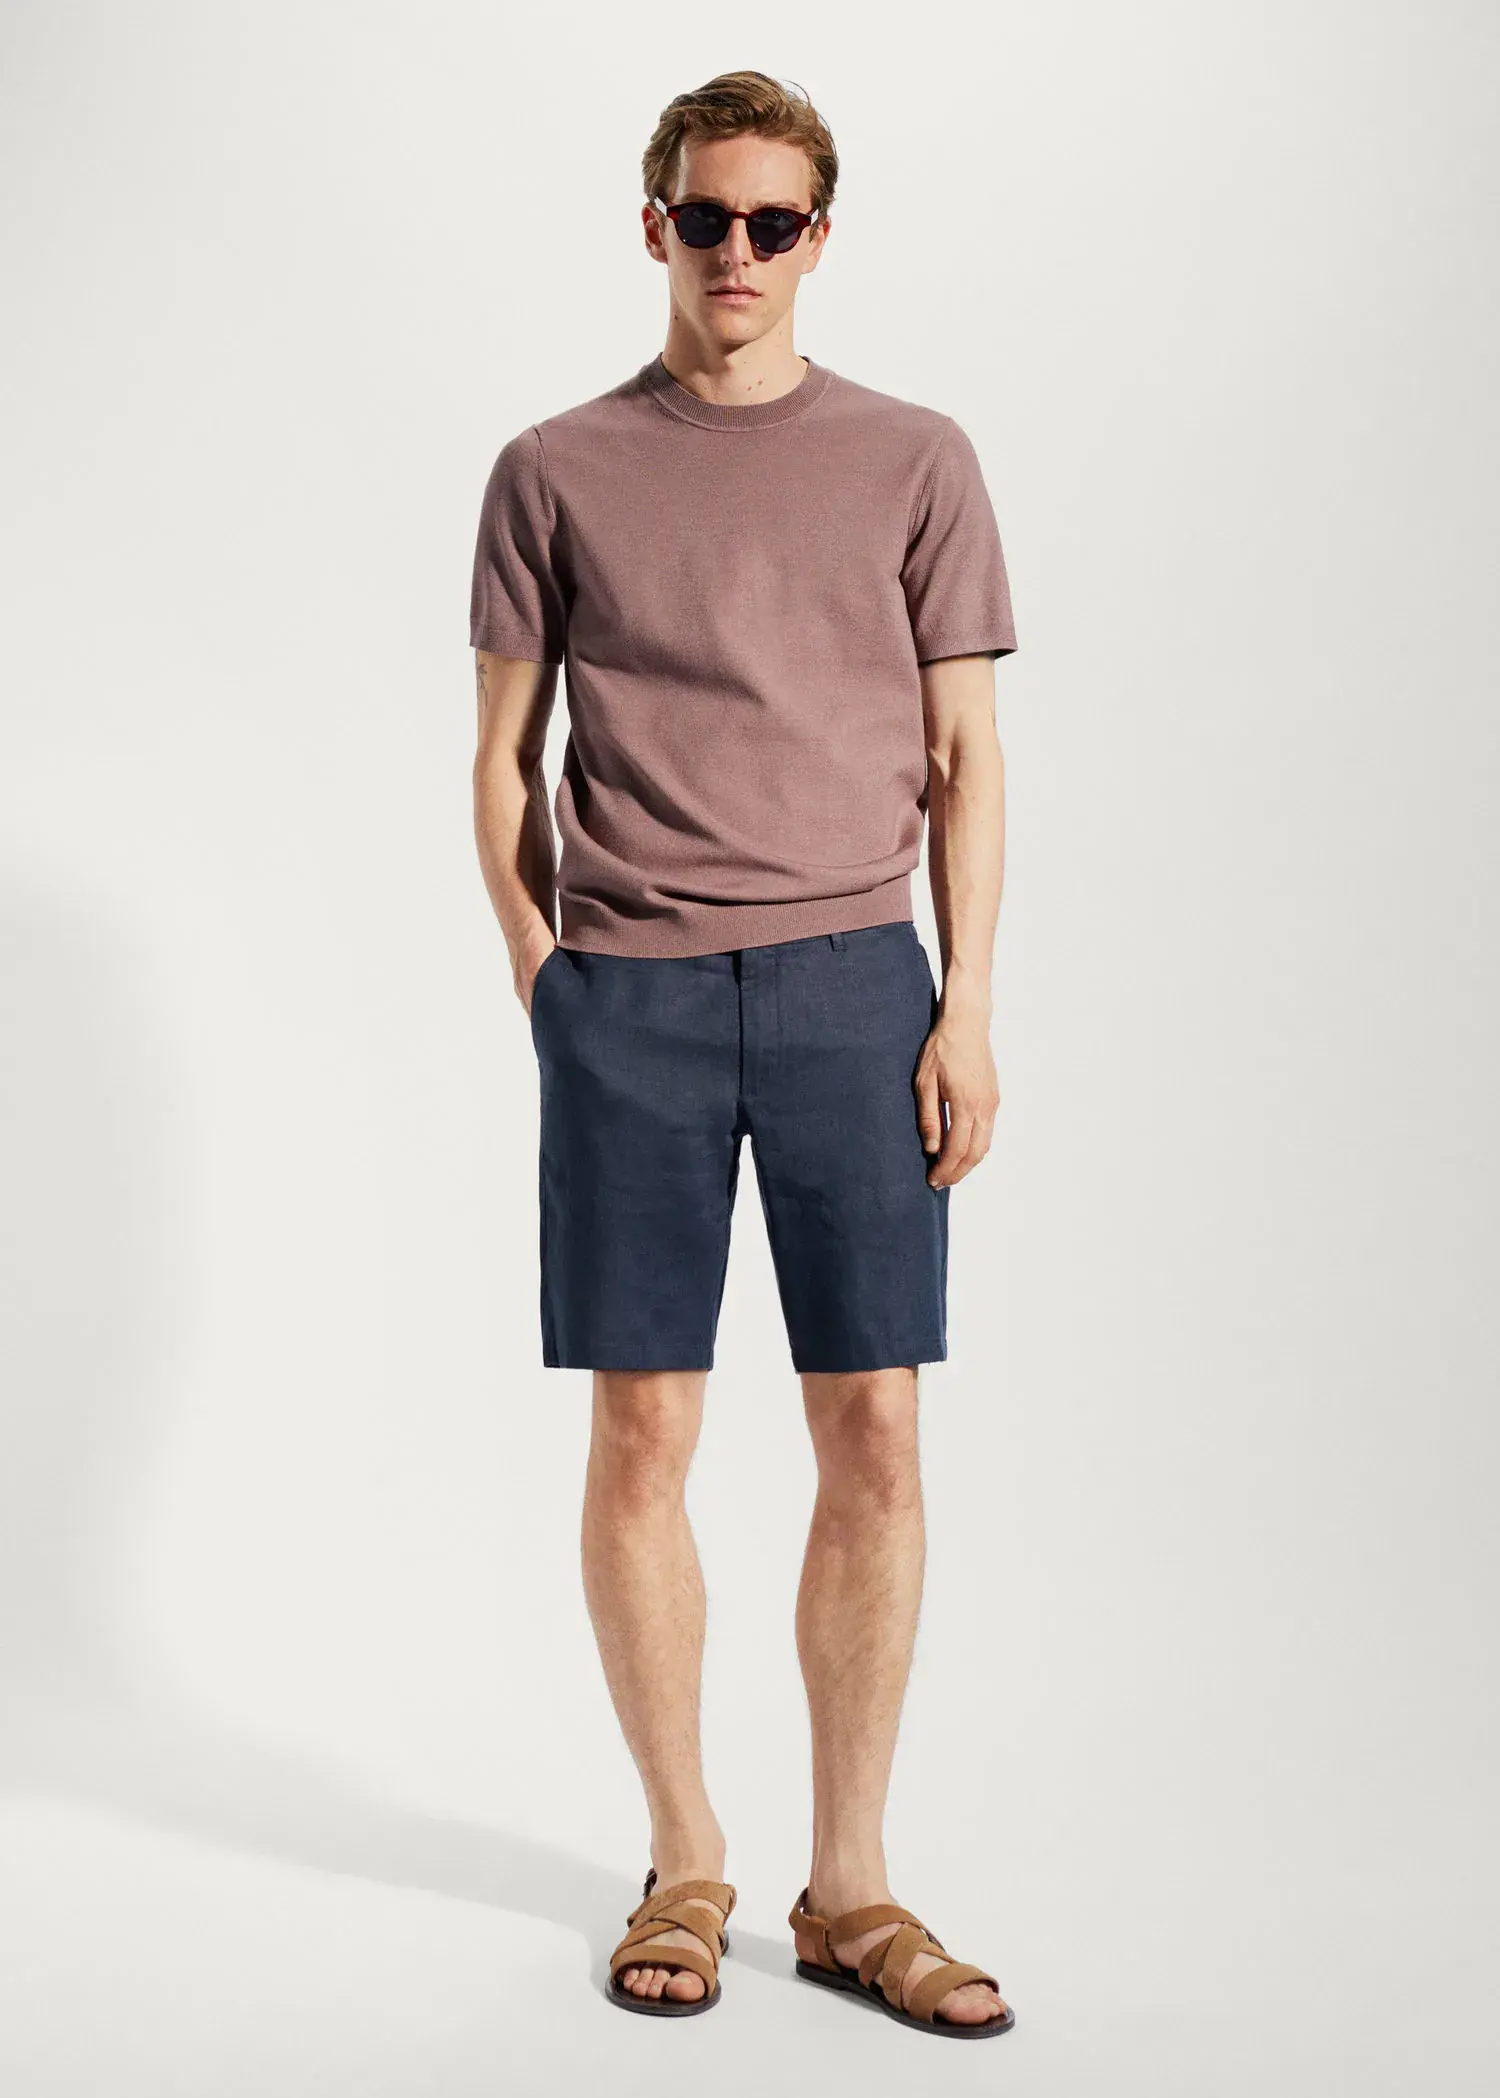 Mango 100% linen shorts. a man in a tan t-shirt and navy blue shorts. 